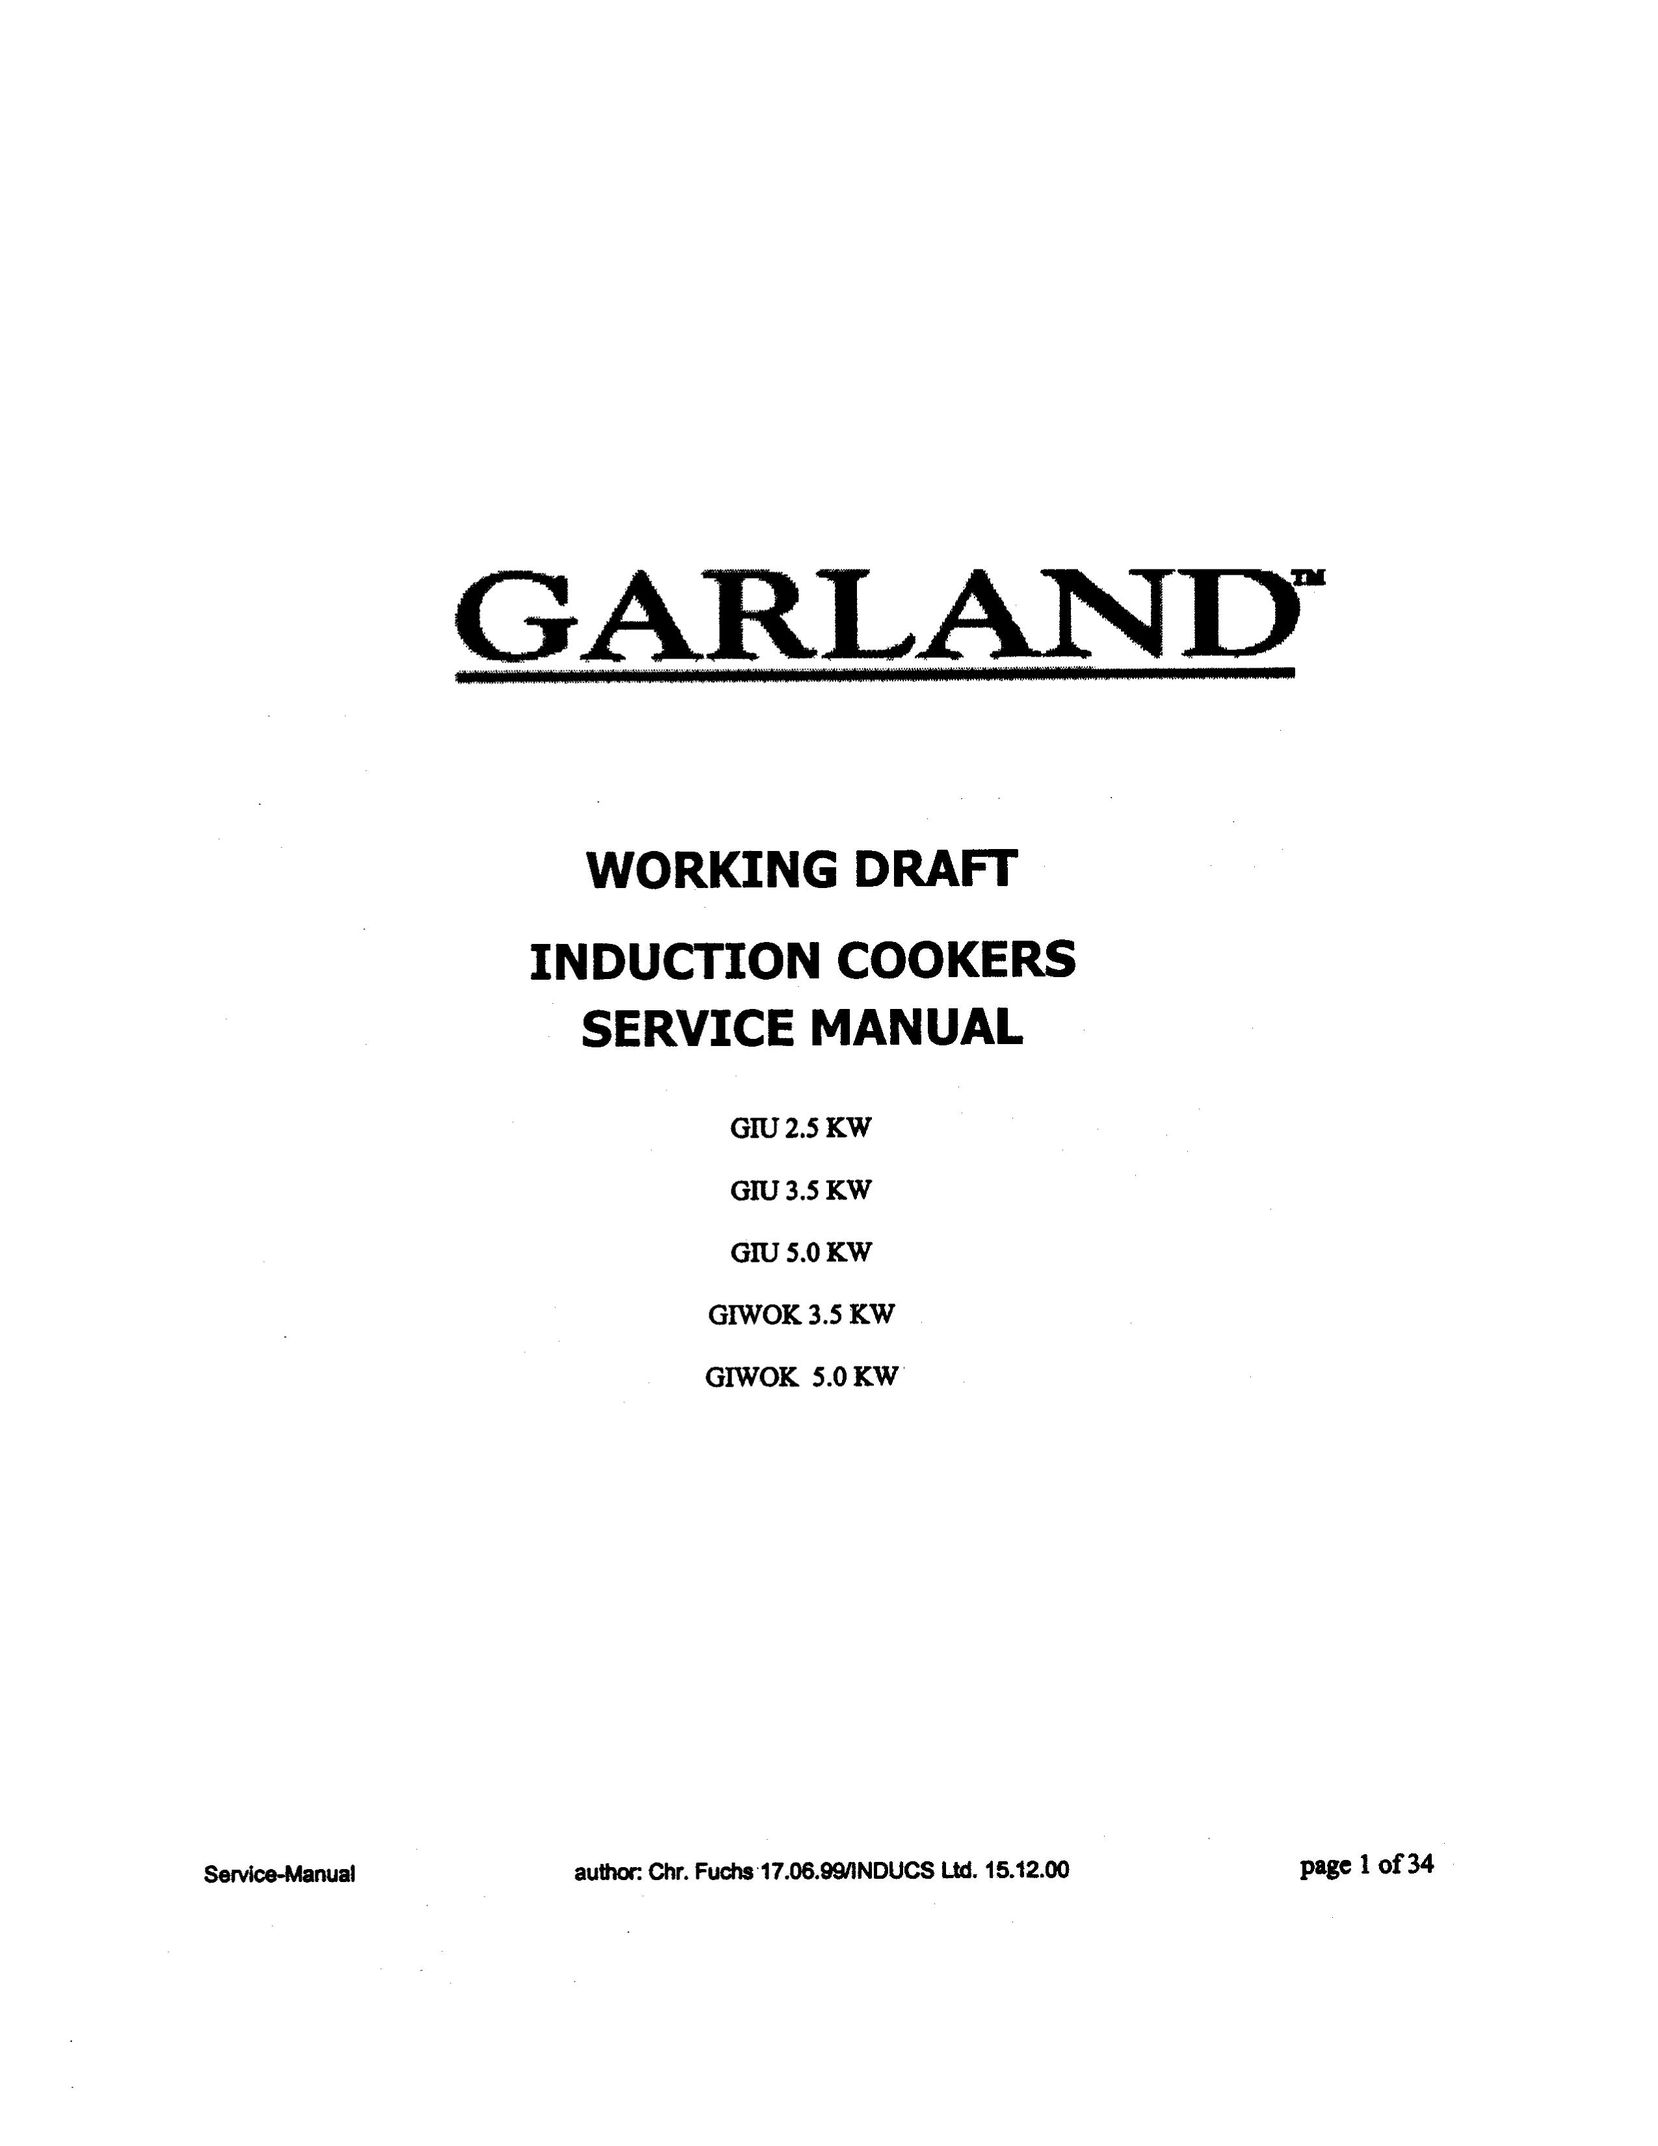 Garland GIWOK 3.5 KW Cooktop User Manual